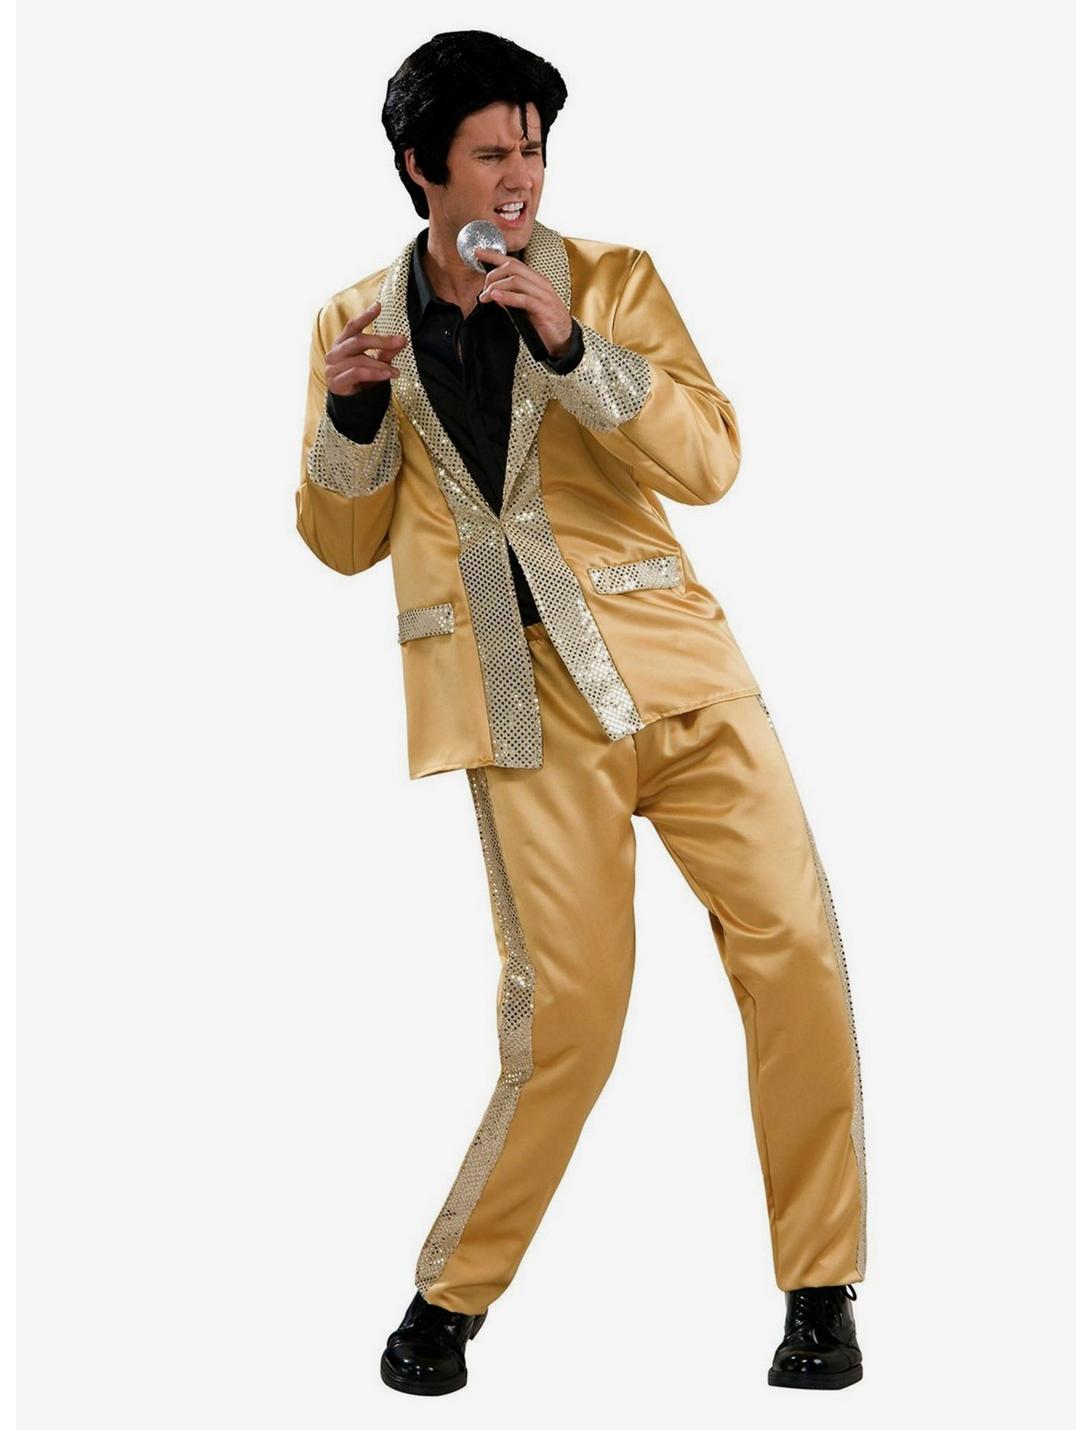 Elvis Presley Deluxe Gold Satin Costume, GOLD, hi-res